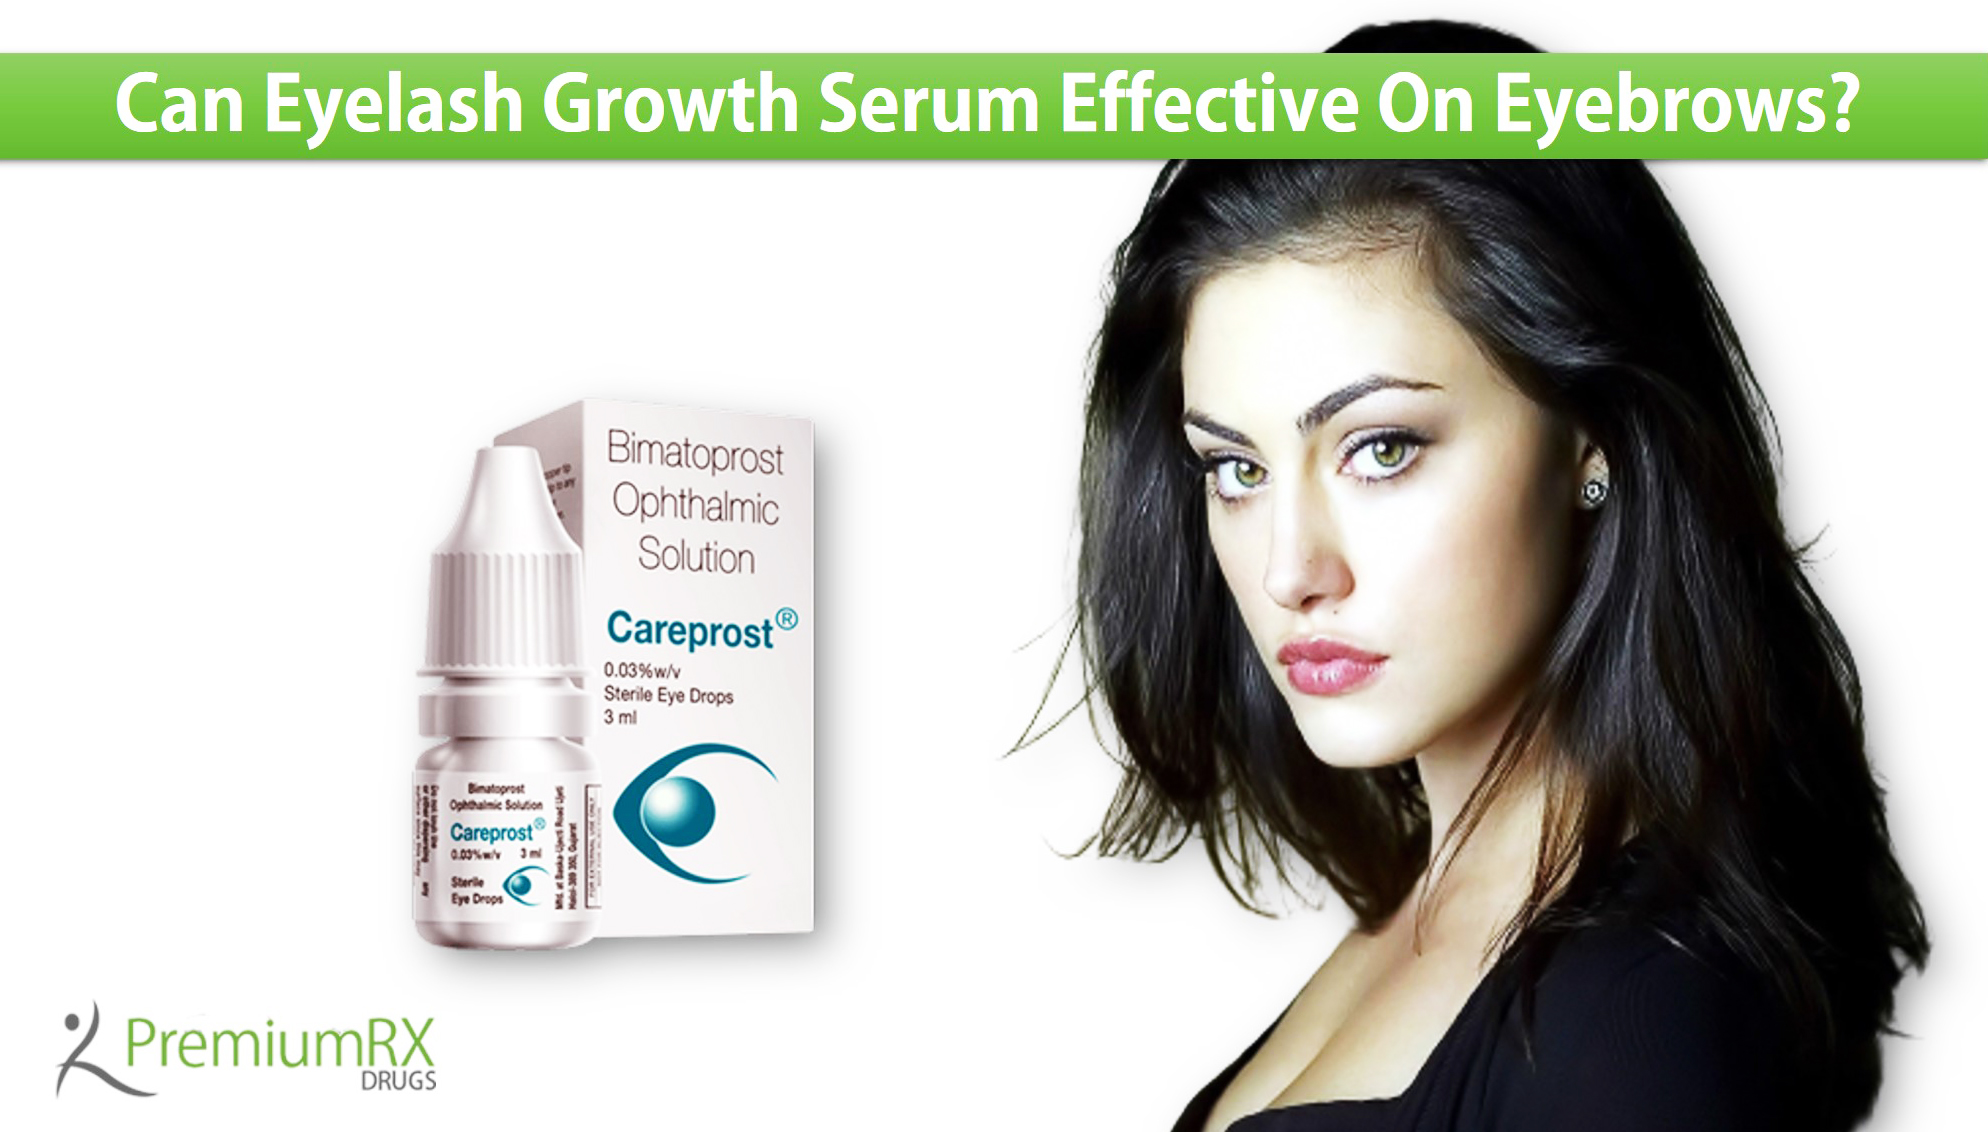 Can Eyelash Growth Serum Effective On Eyebrows